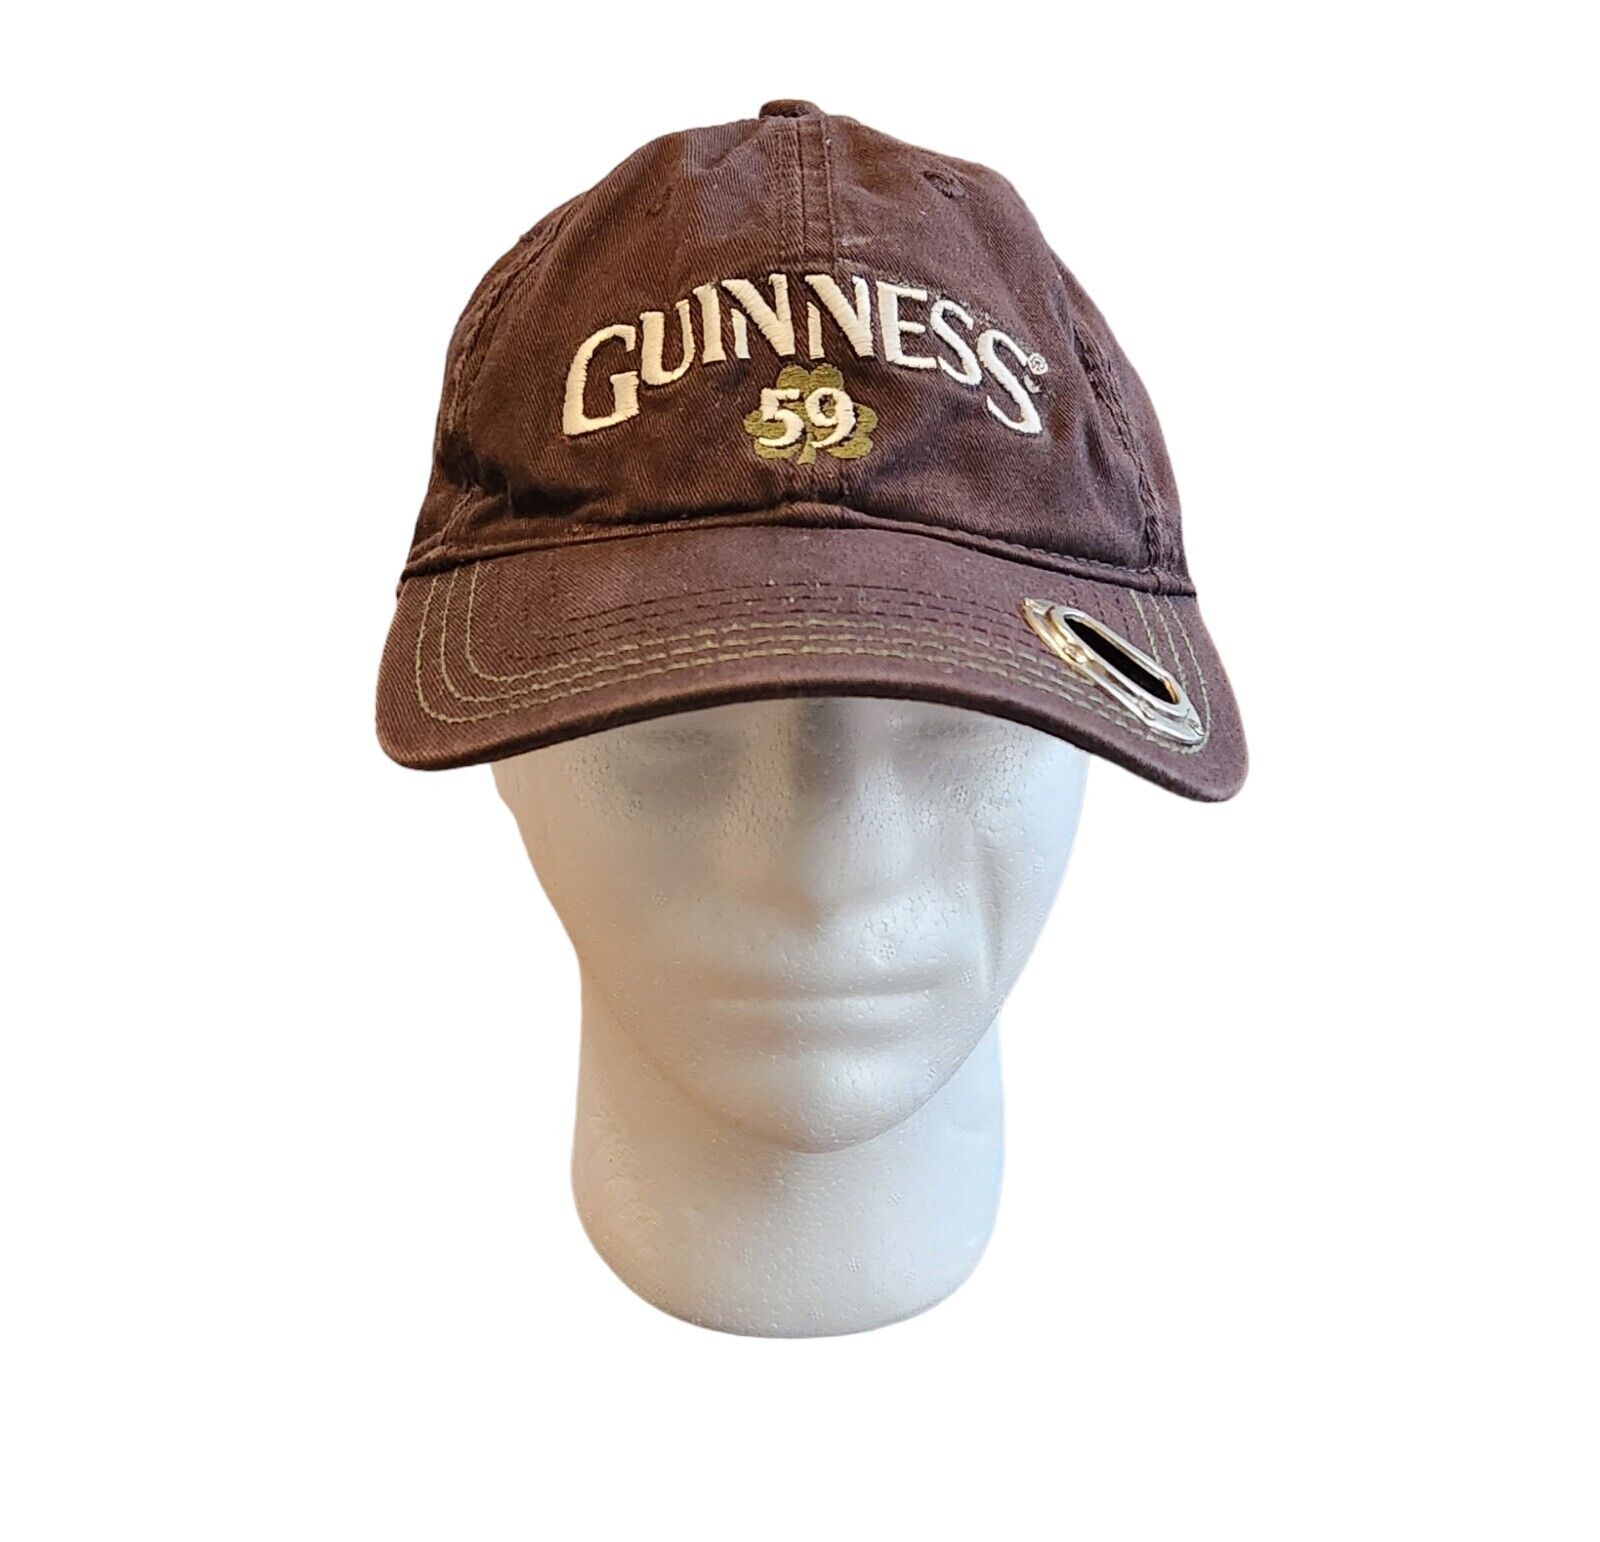 Guinness Bottle Opener Hat Brown Hat Cap With Built In Bottle Opener